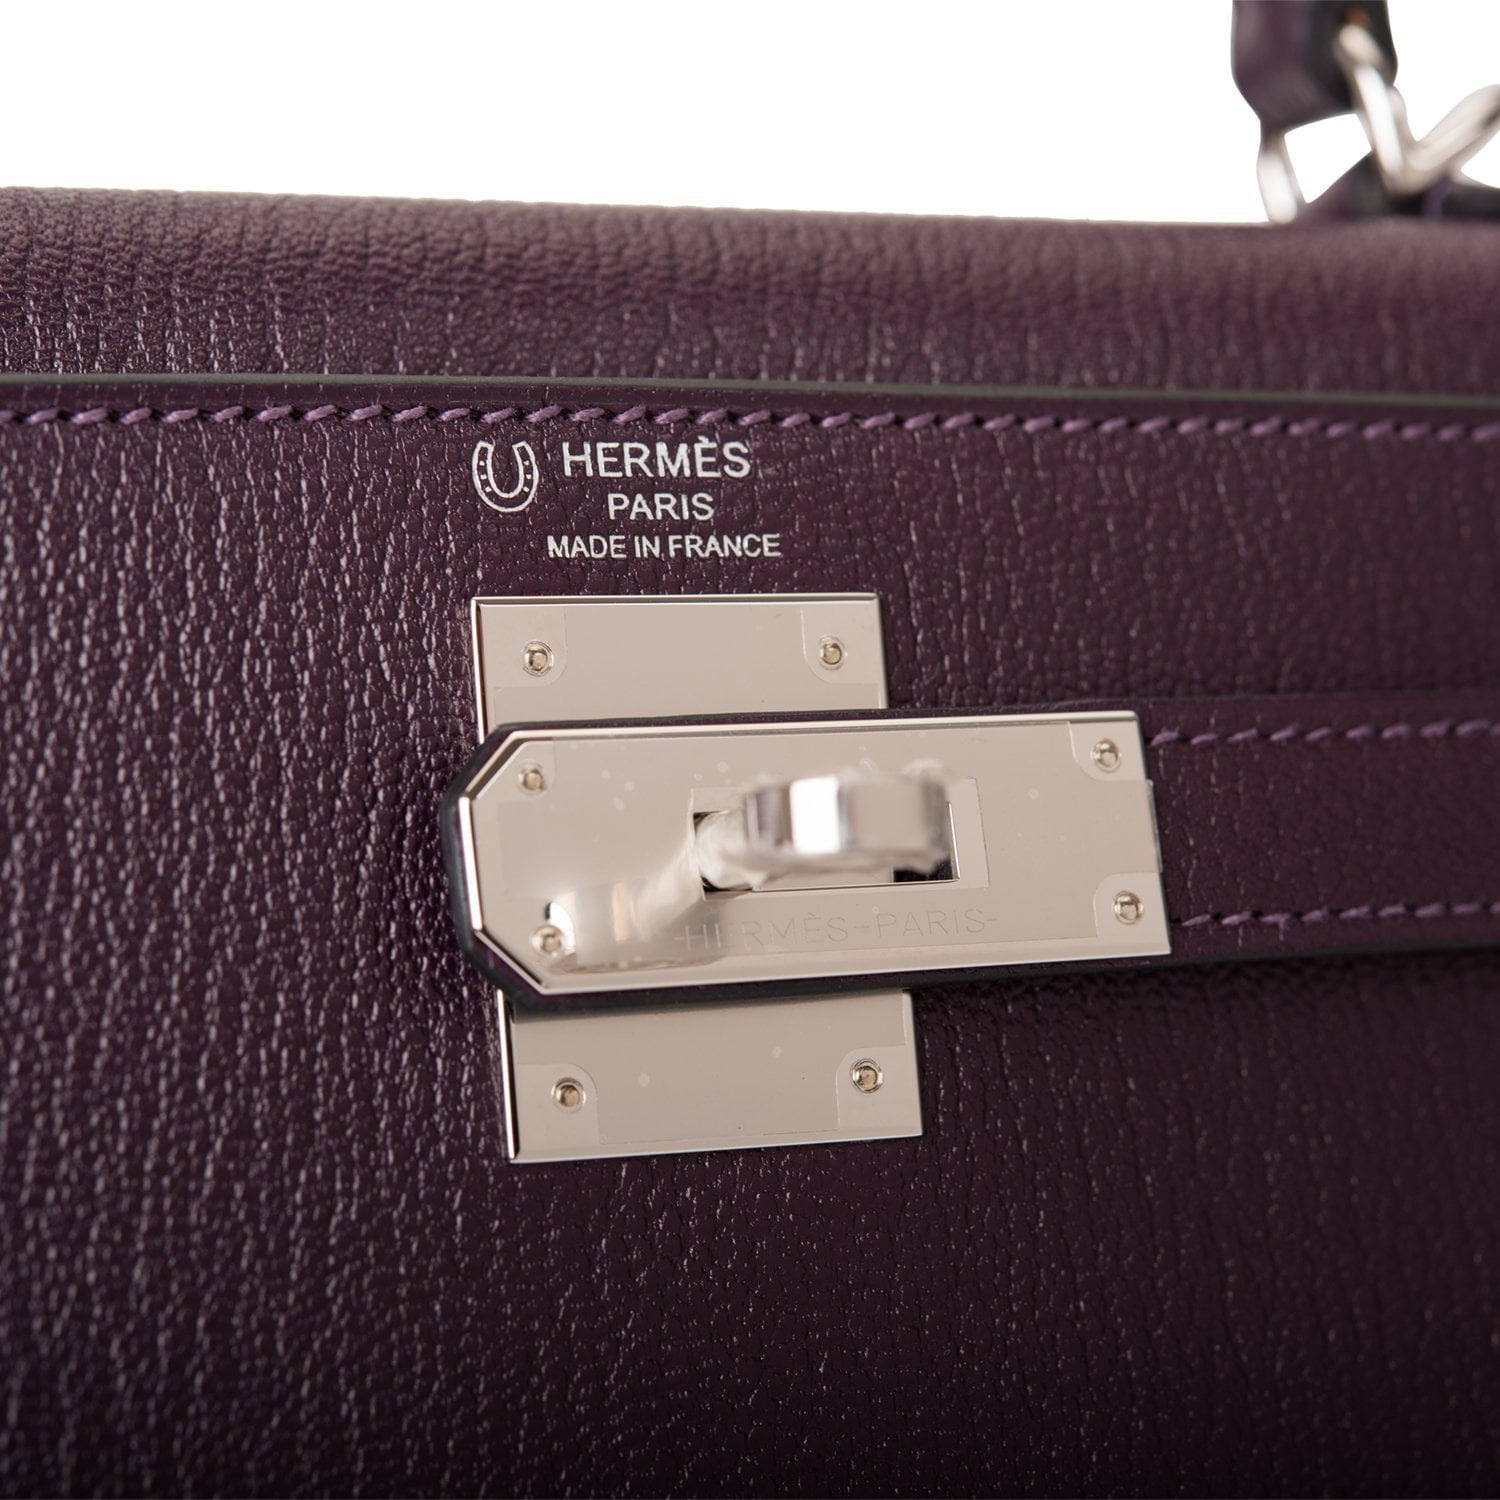 Hermes Handbags - New Arrivals – Madison Avenue Couture